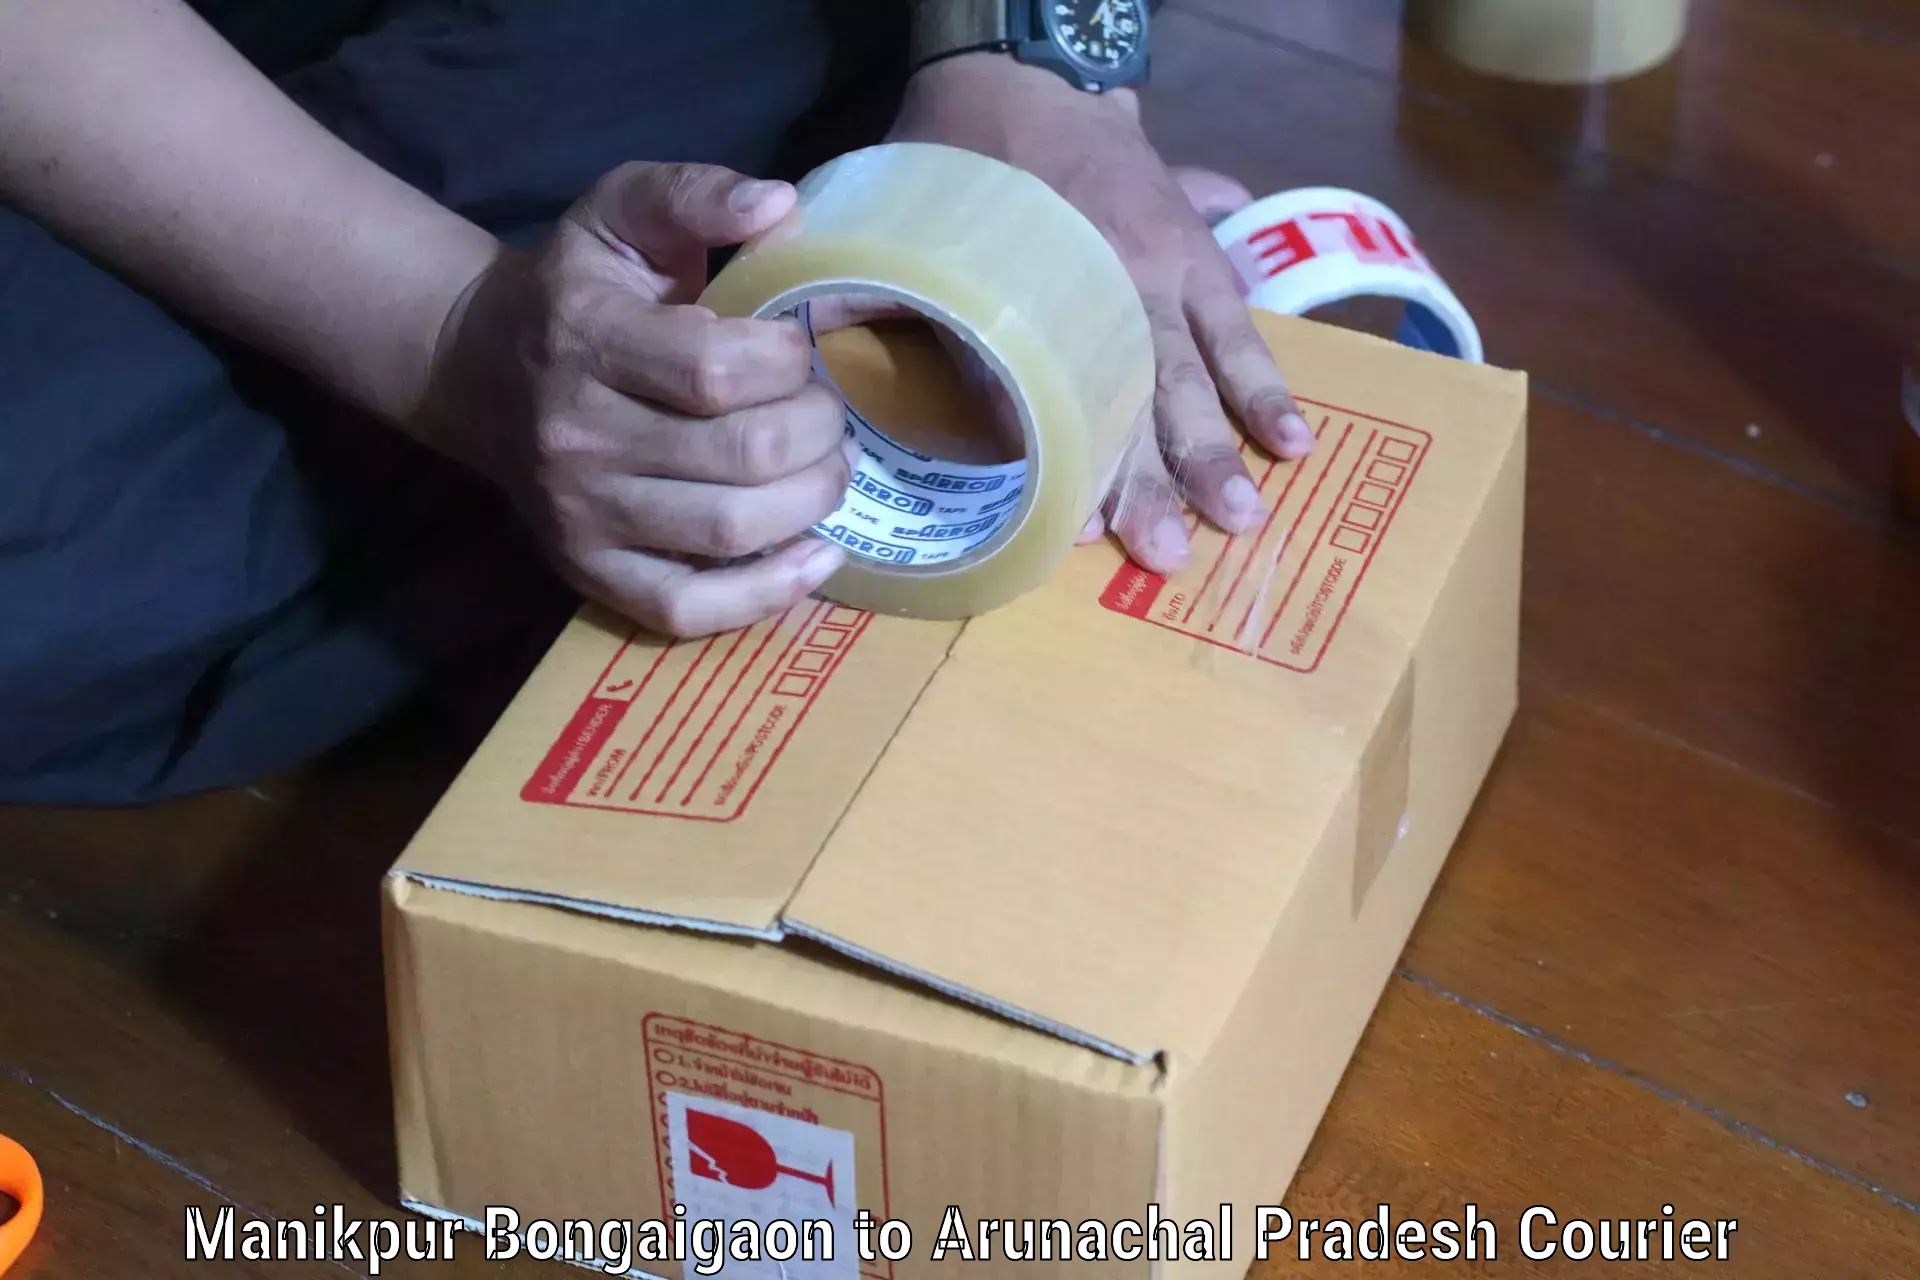 Professional courier handling Manikpur Bongaigaon to Yingkiong